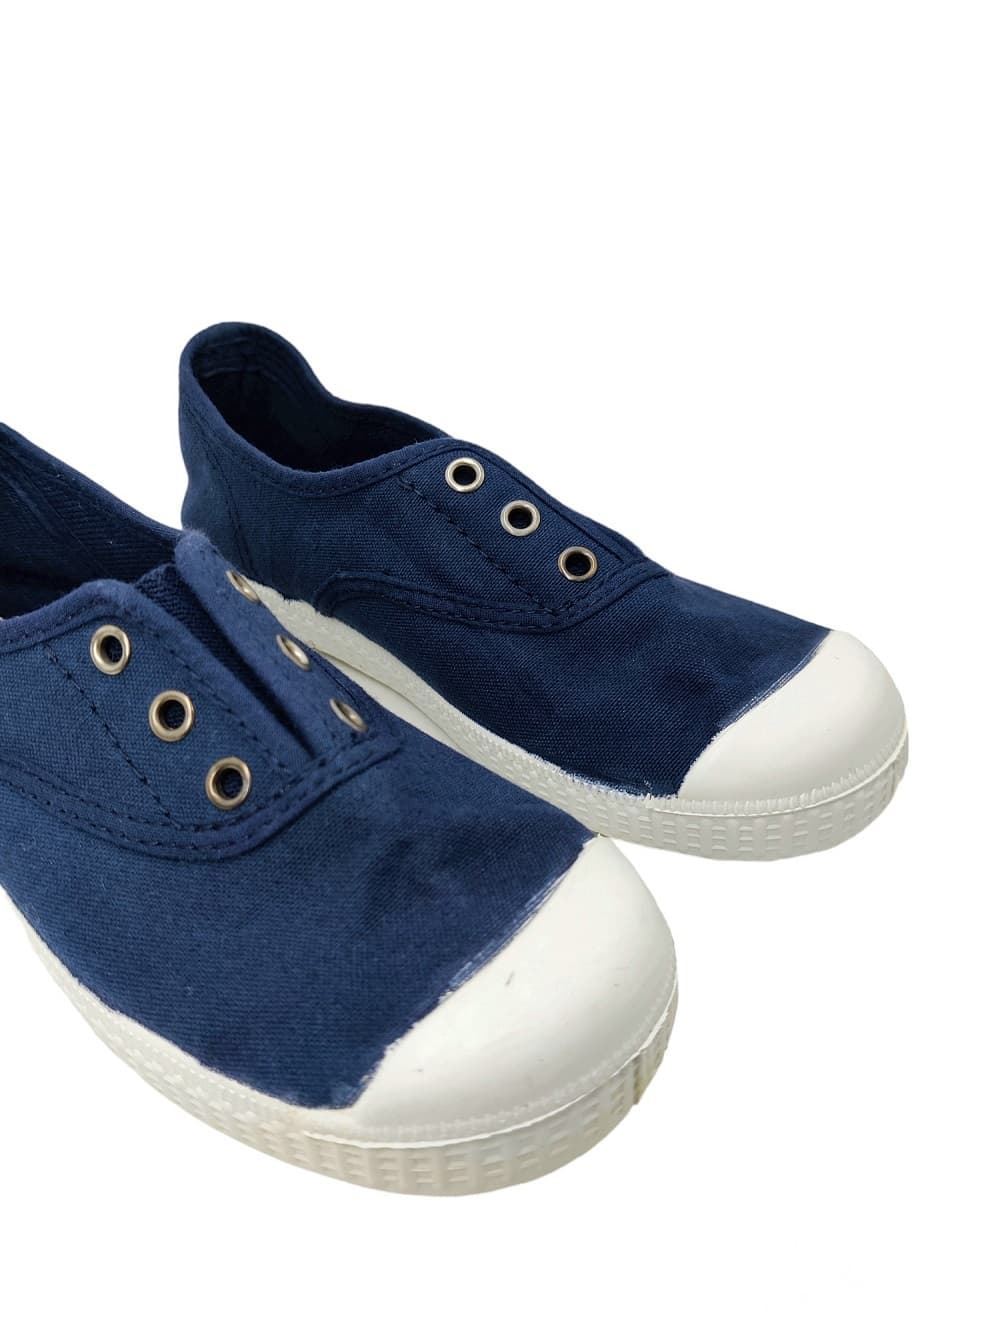 La Cadena Children's Navy Canvas Sneakers with Toe Cap - Image 4